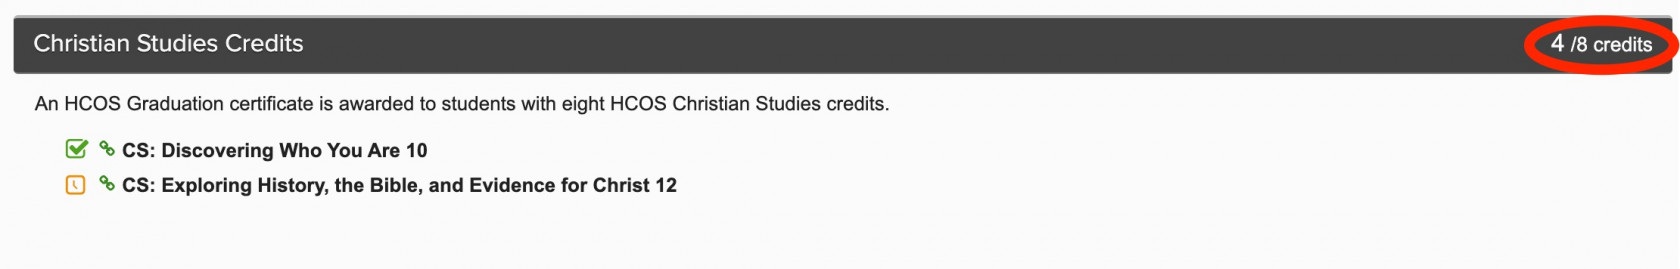 Christian Studies Credits.jpg